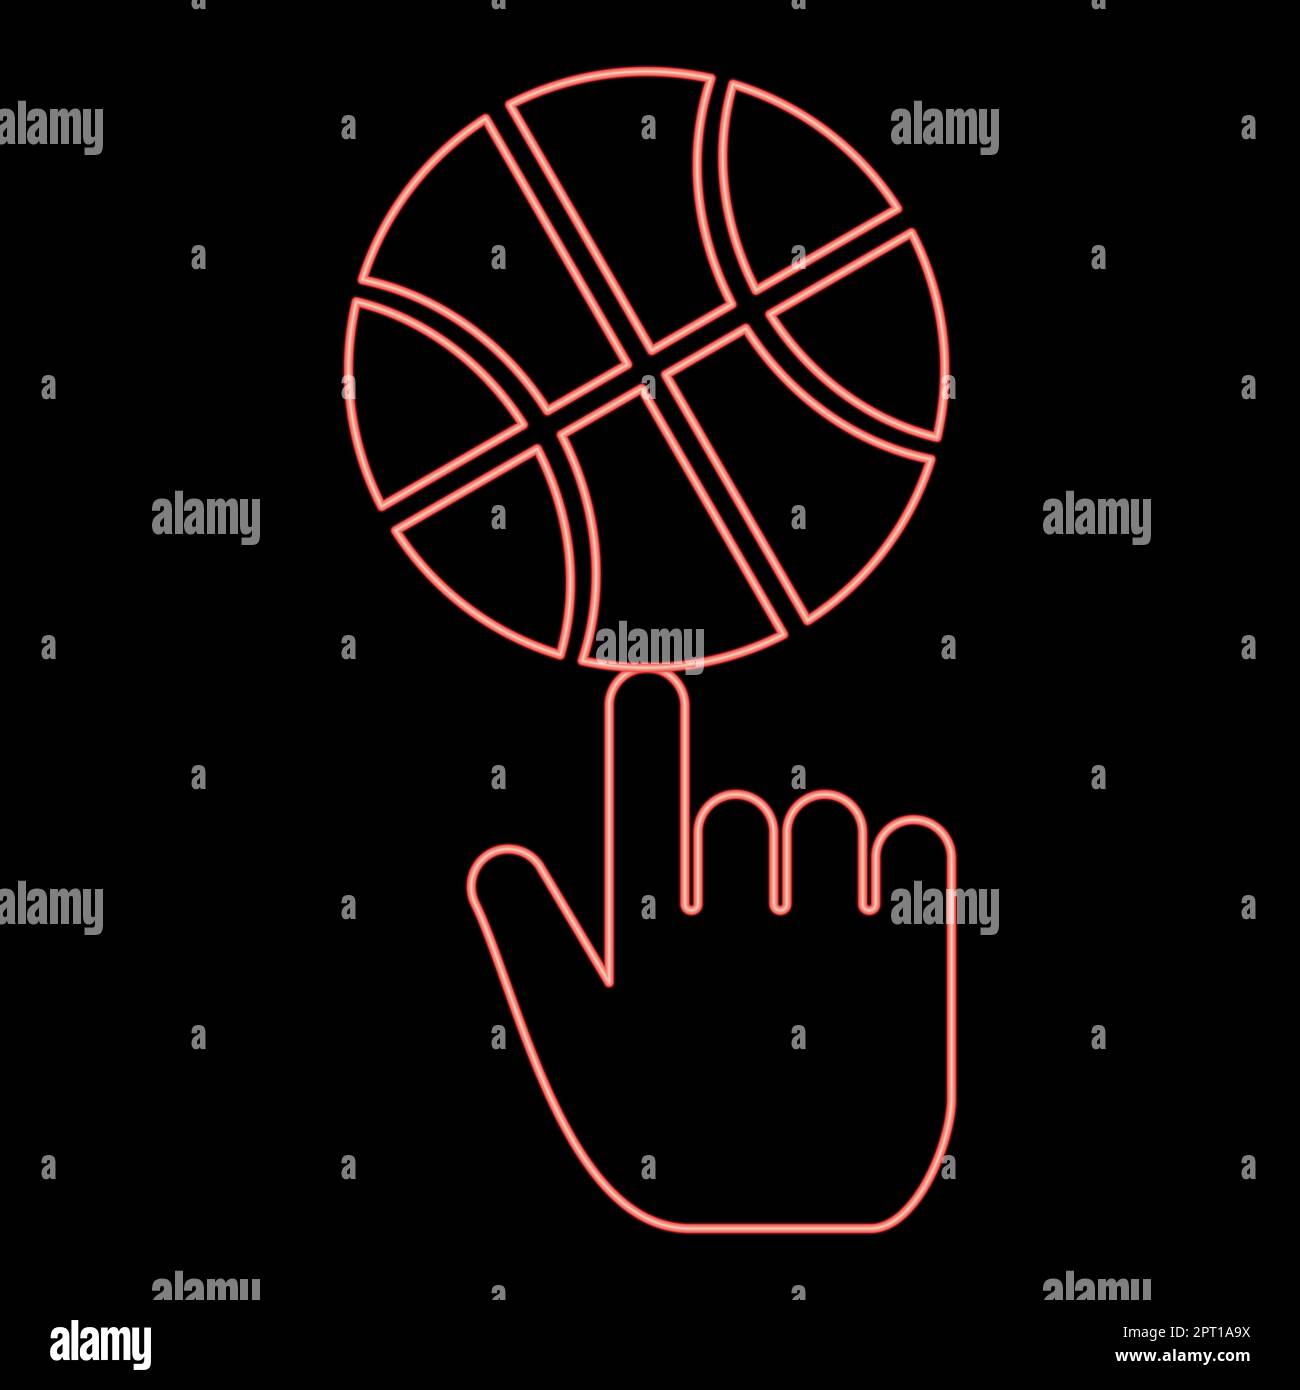 Neon-Basketballball, der sich über dem Zeigefinger dreht, roter Farbvektor Abbildung flacher Stil Stock Vektor